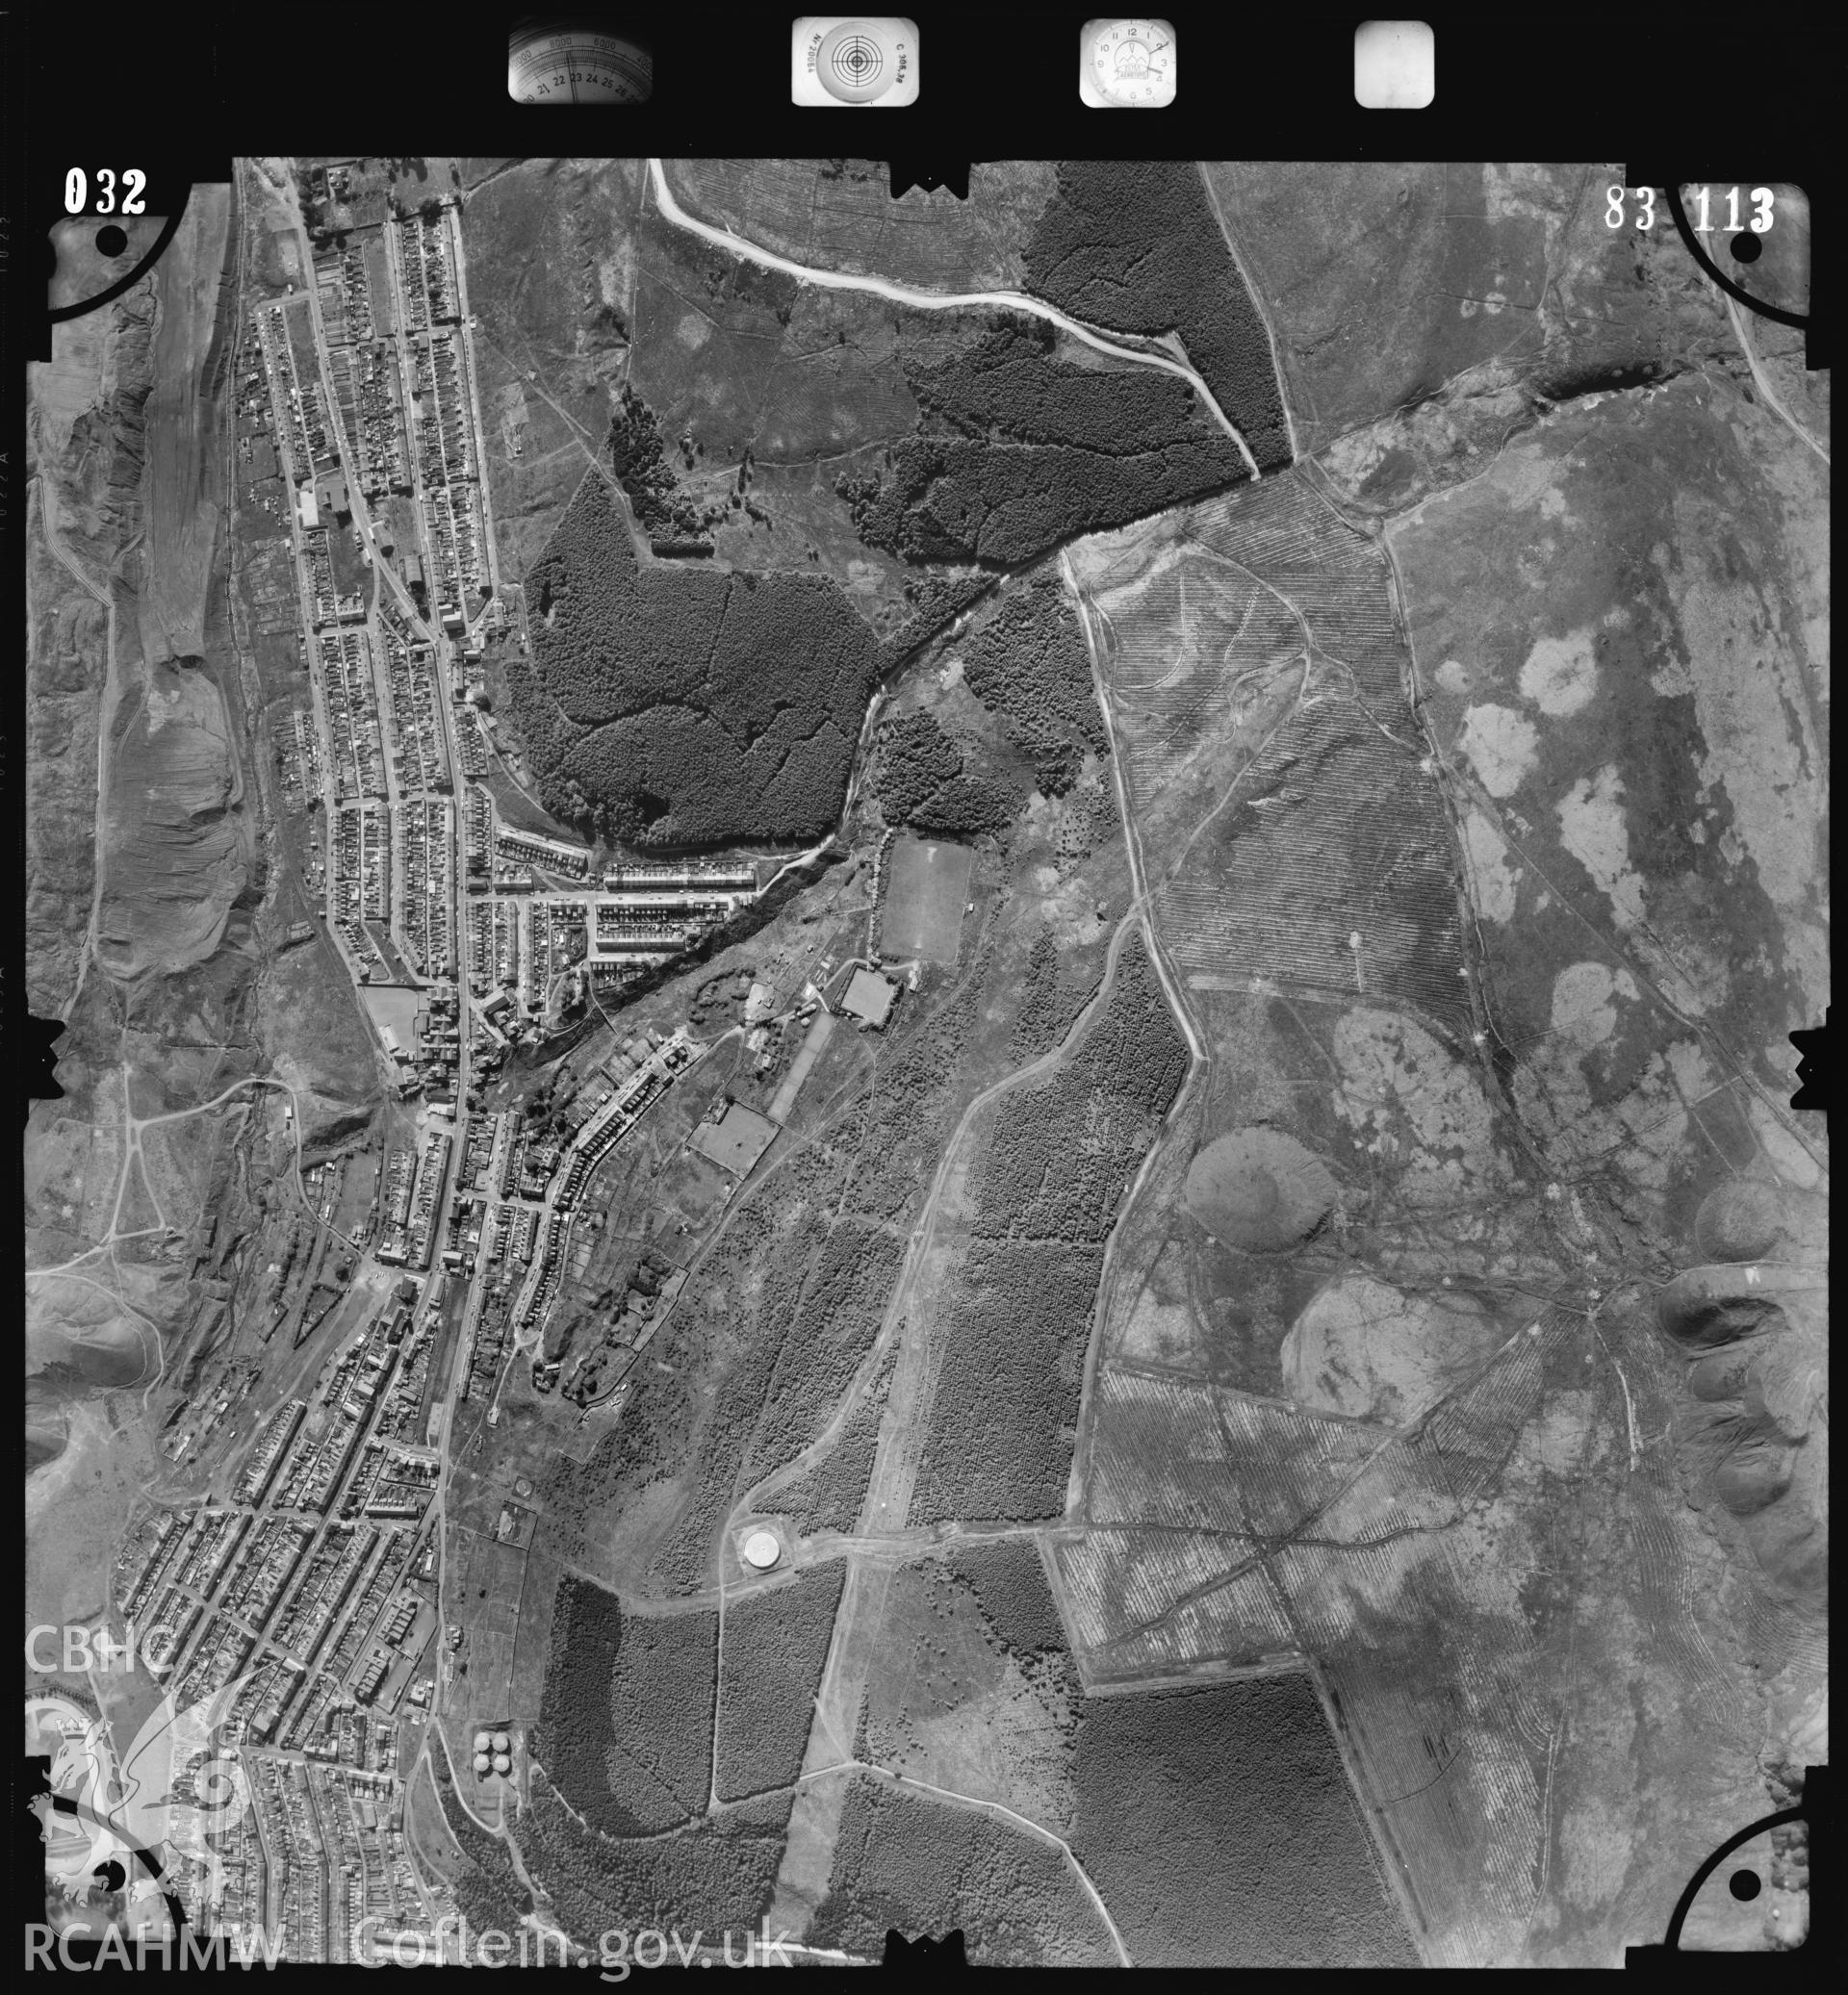 Digital copy of an Ordnance Survey aerial view of Clydach Vale.